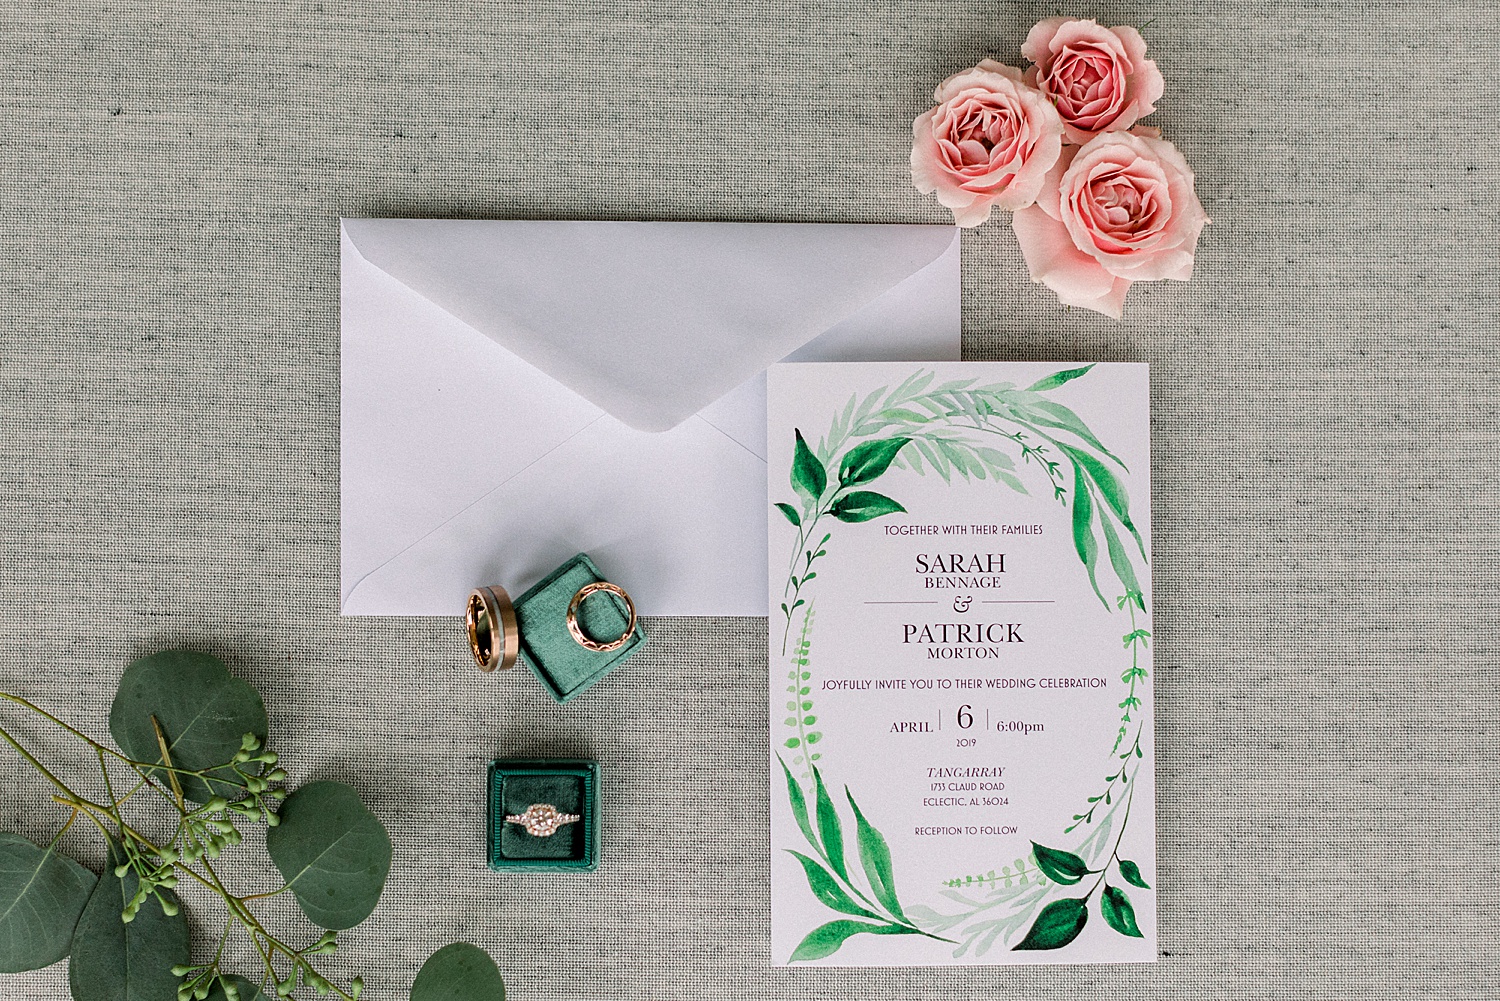 wedding invitations and wedding rings from AL wedding